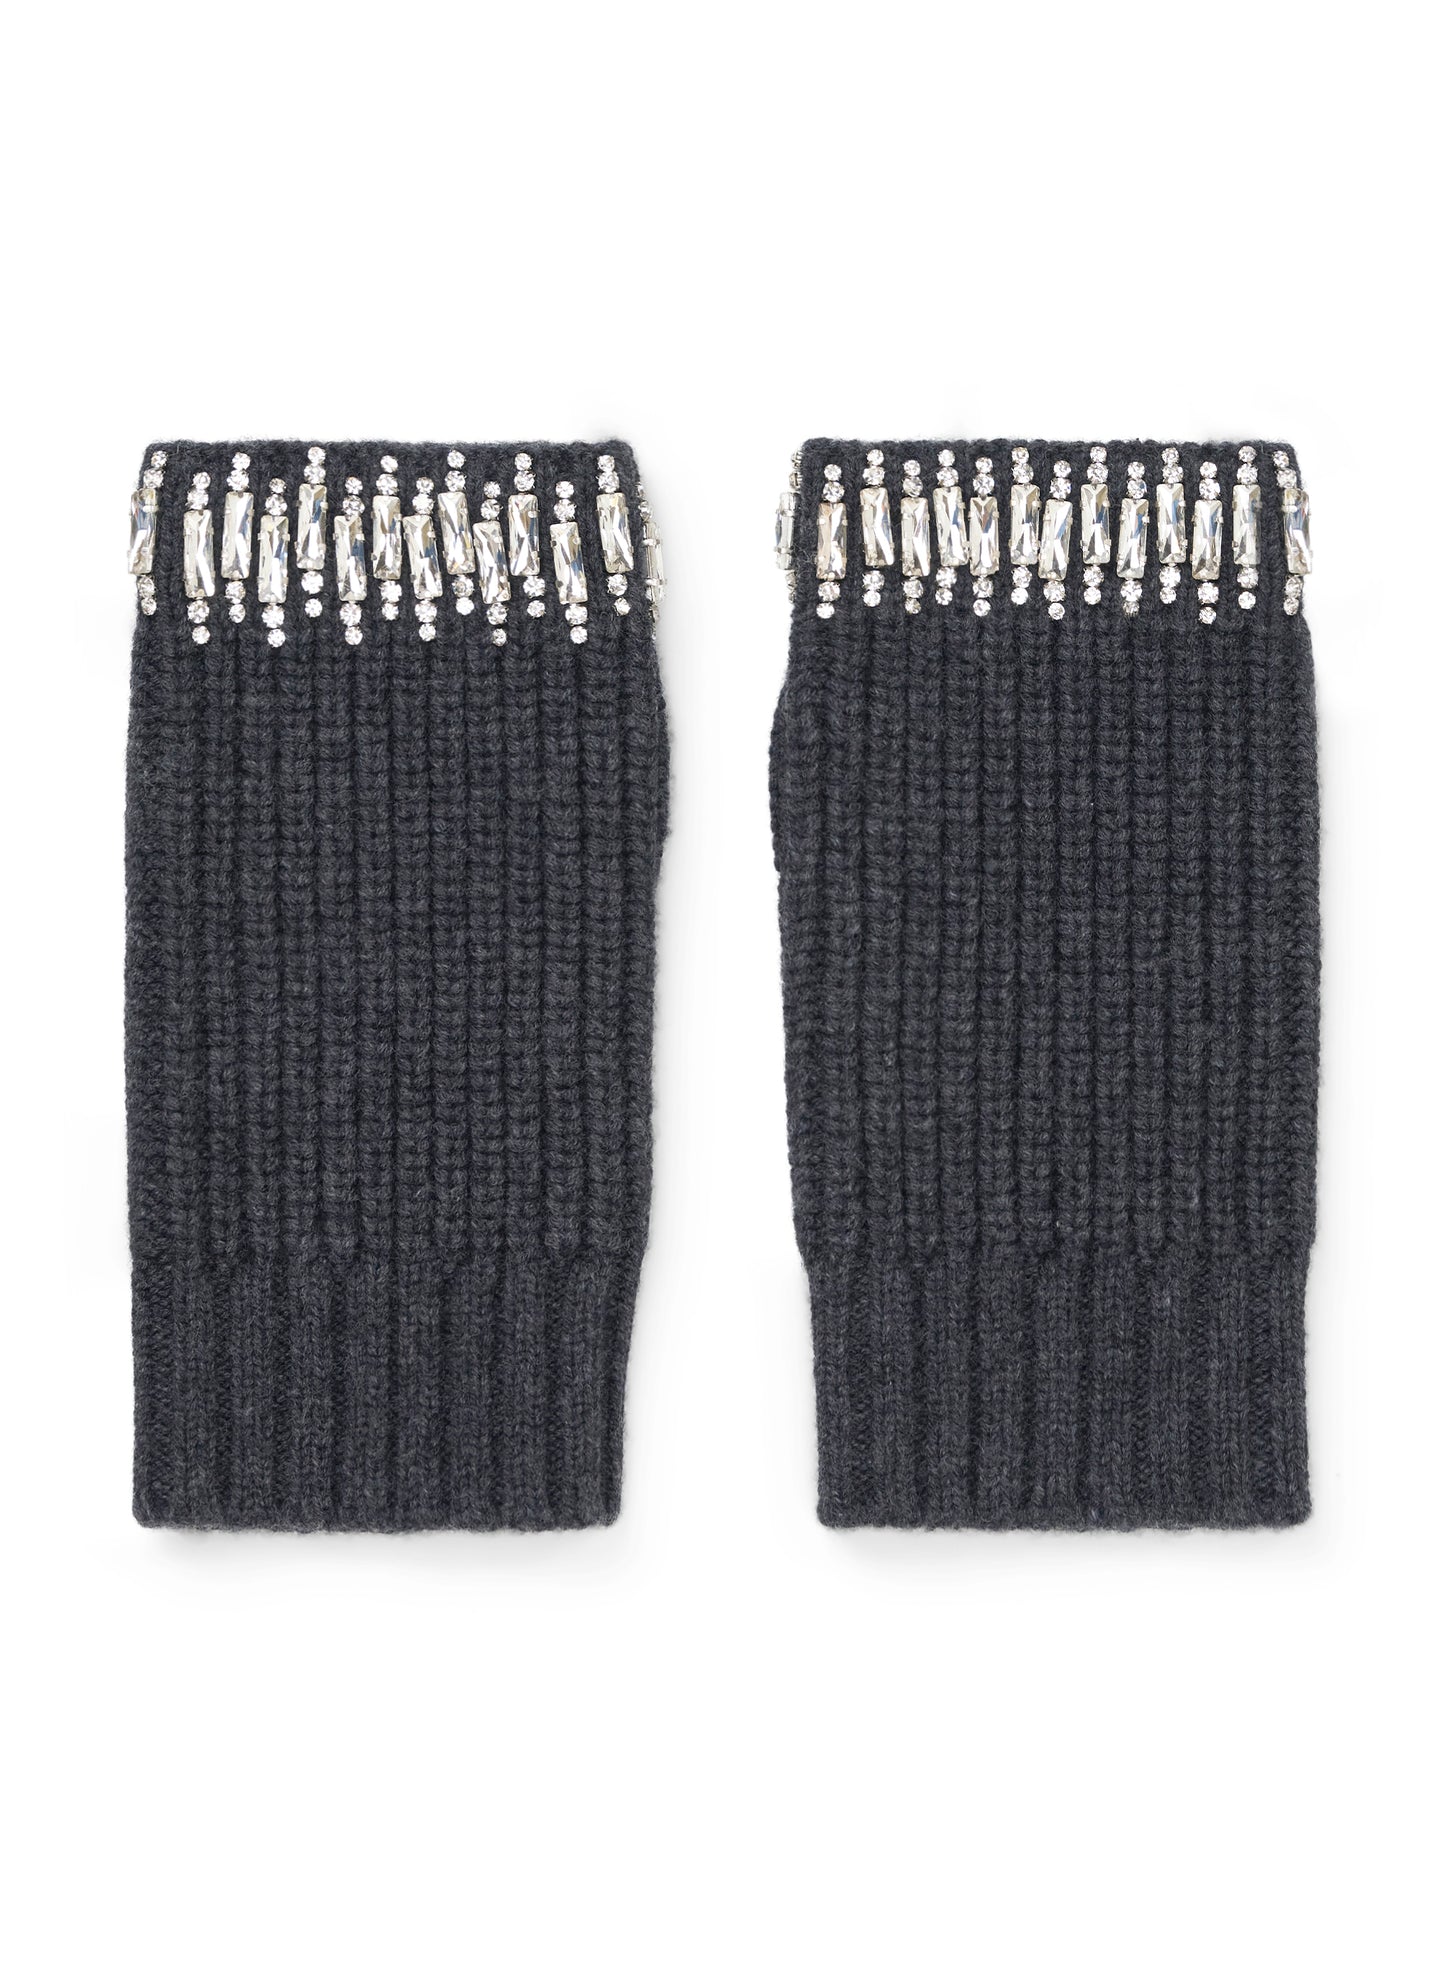 flat lay view of dark fingerless grey wool gloves with rhinestone embellishment across knuckles